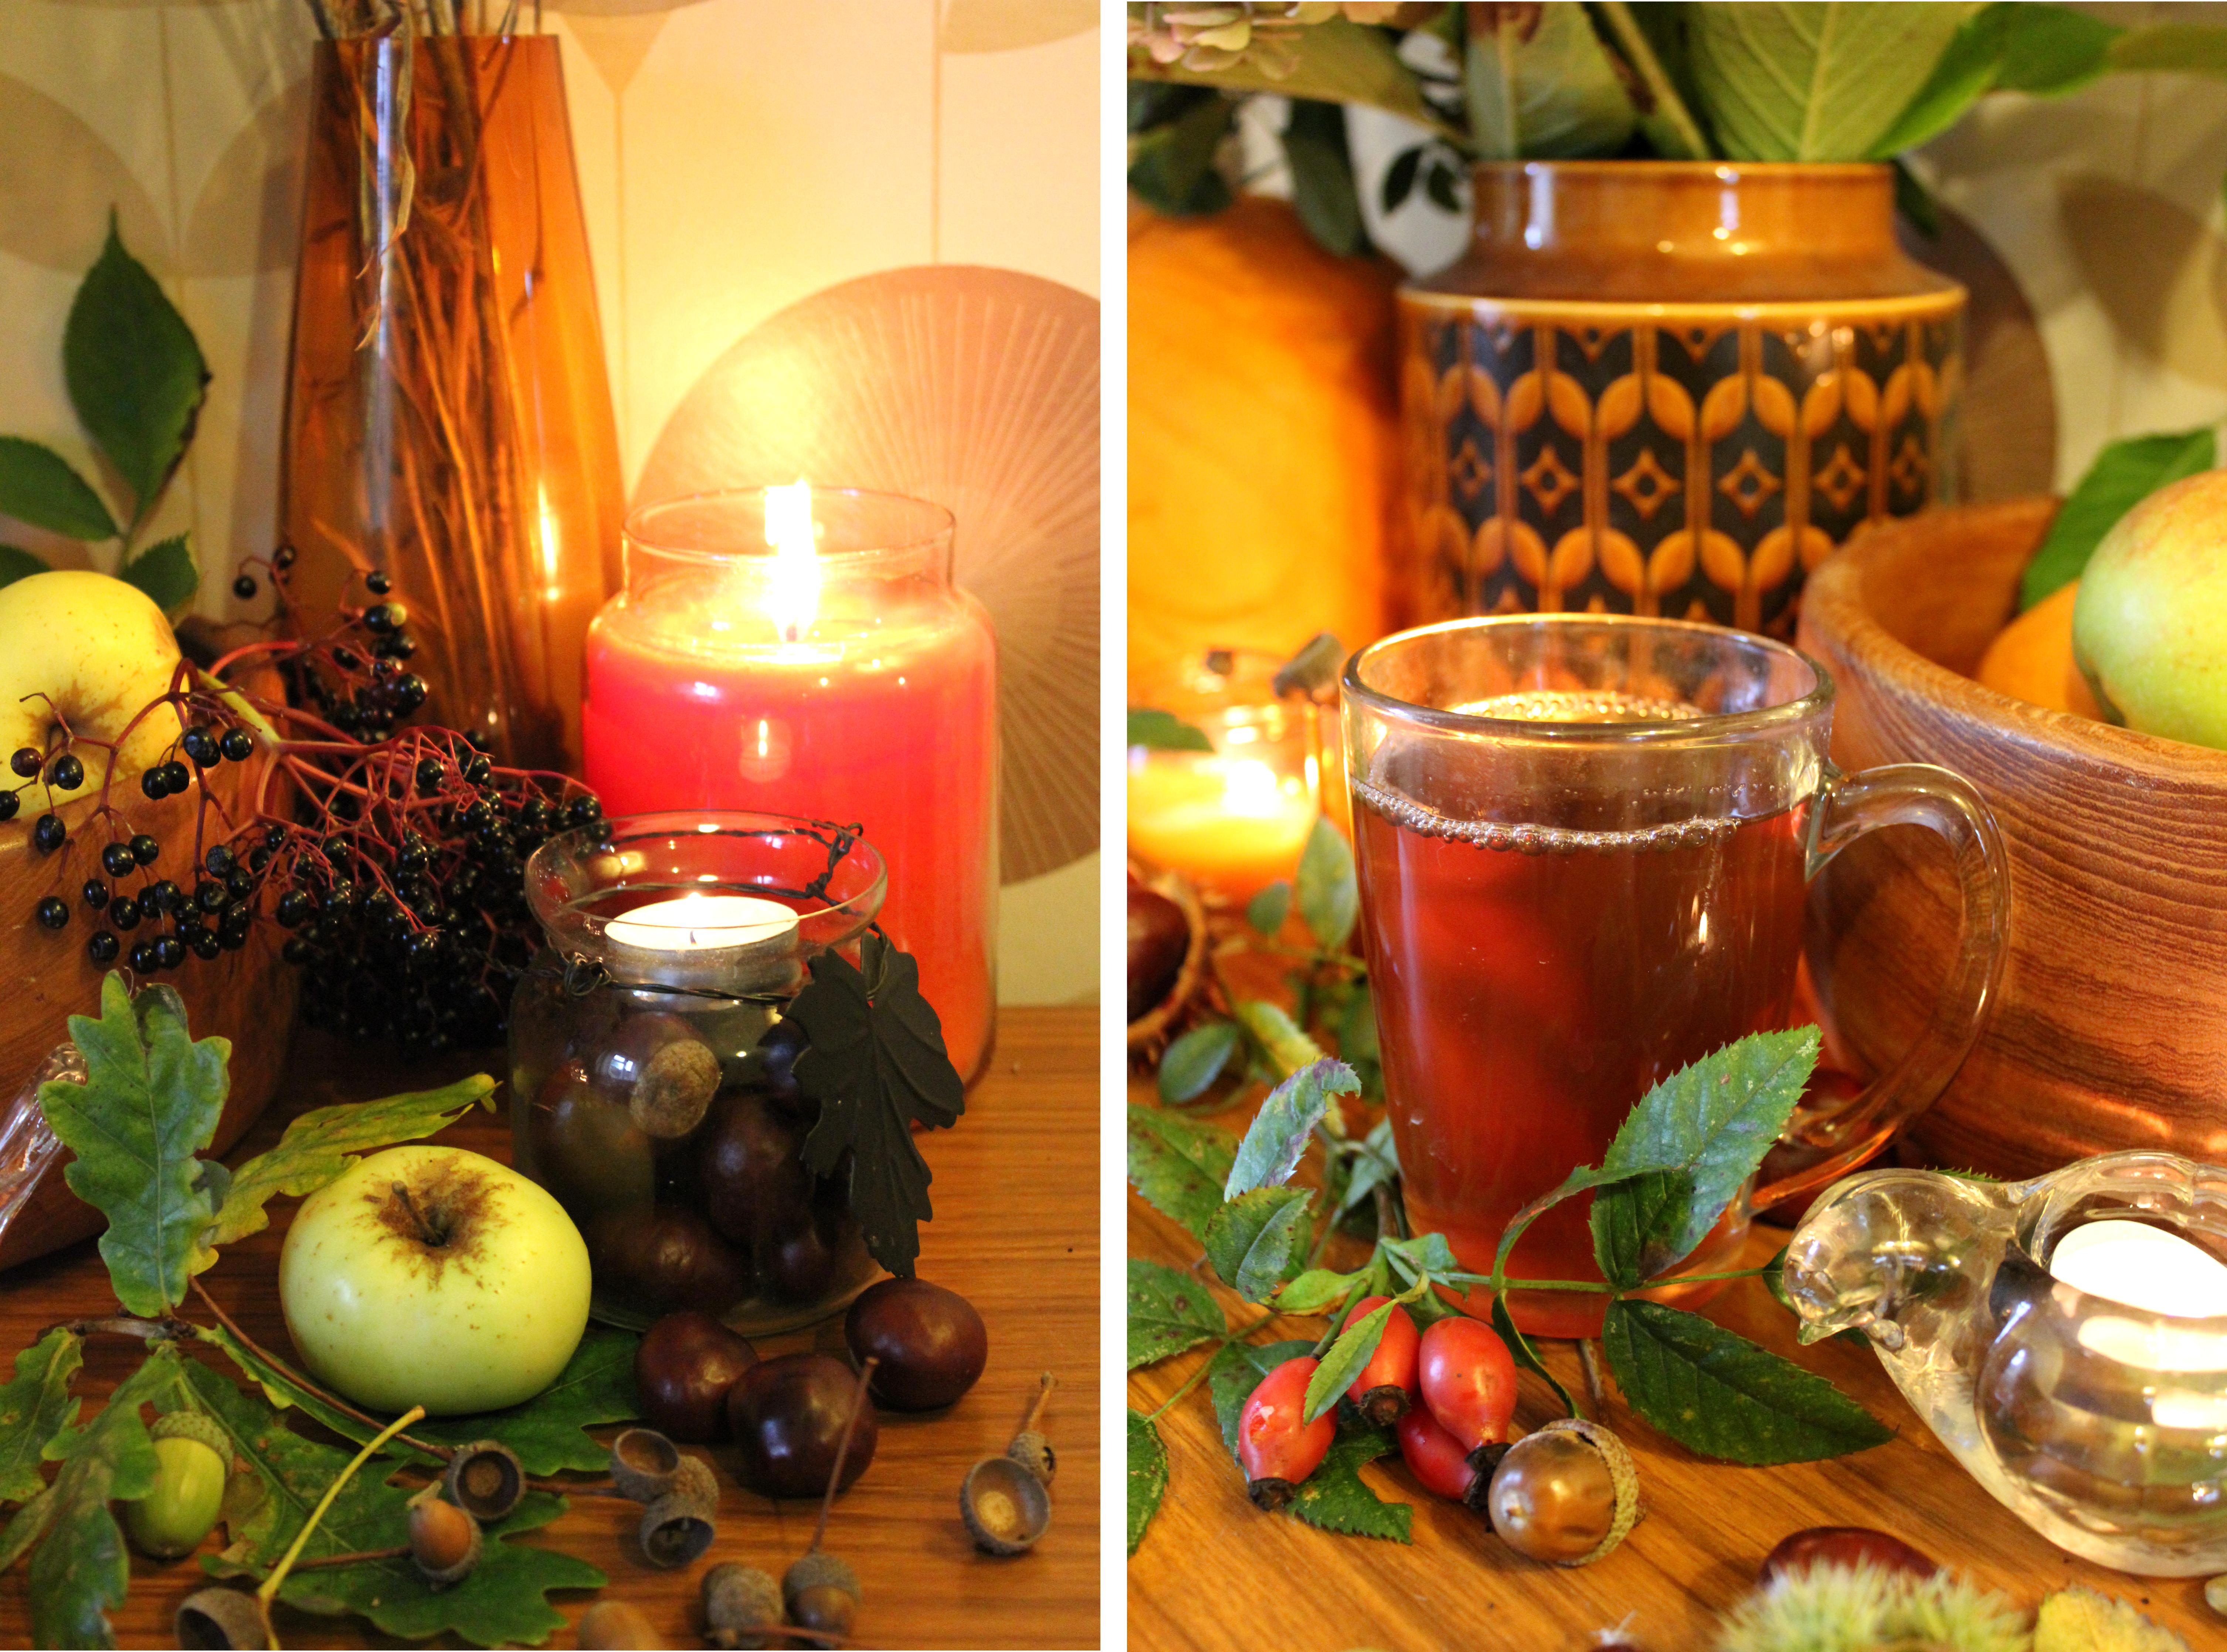 my retro living room autumn decor harvest floral arrangment and spiced apple juice